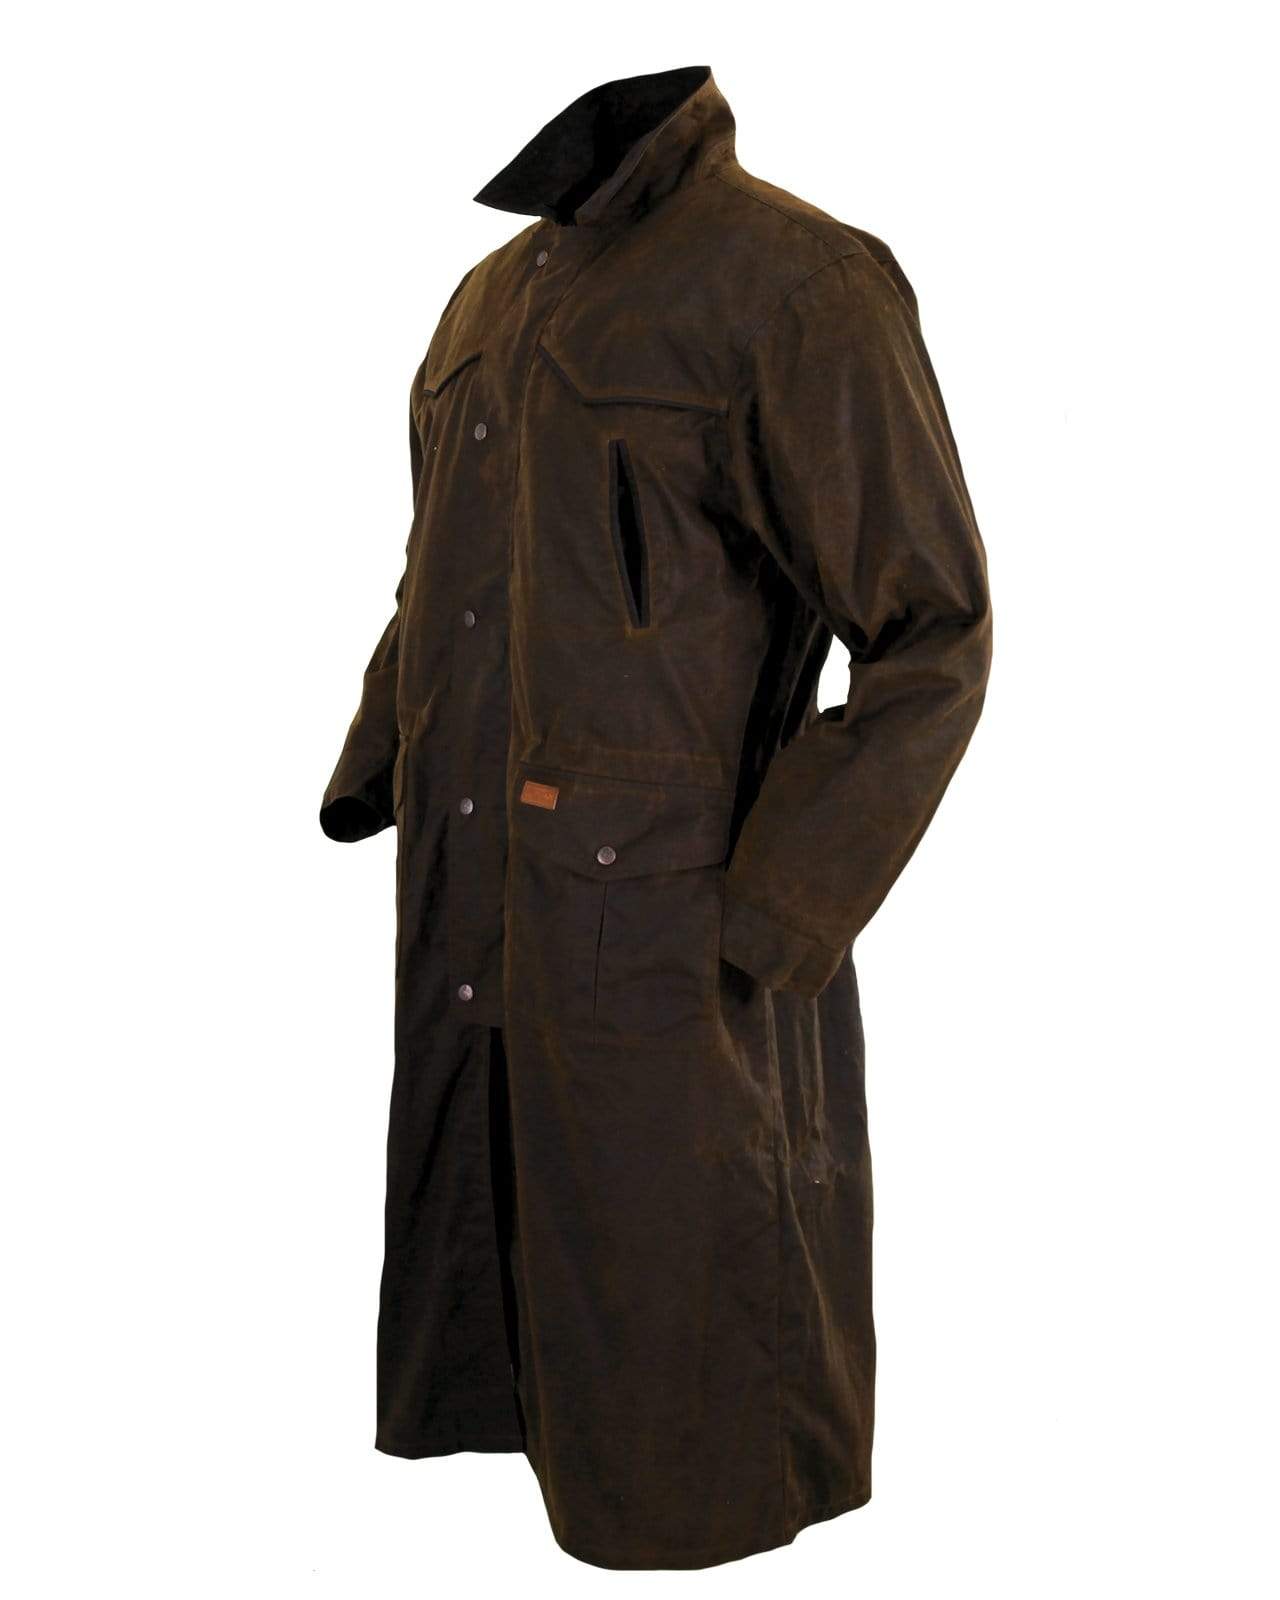 Outback Trading Company Pathfinder Oilskin Duster Coat Coats & Jackets